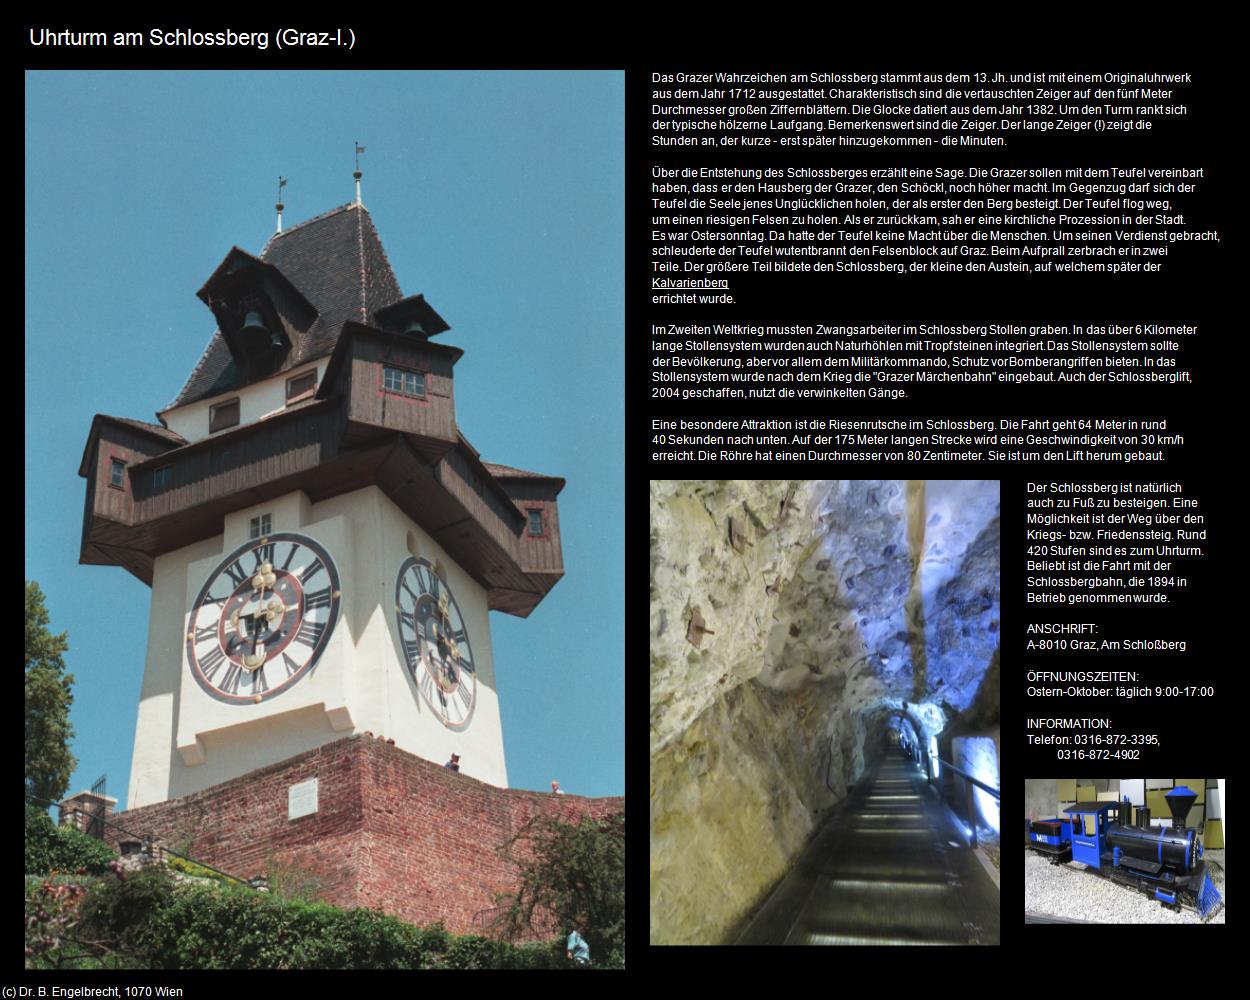 Uhrturm am Schlossberg (I.) (Graz) in Kulturatlas-STEIERMARK(c)B.Engelbrecht